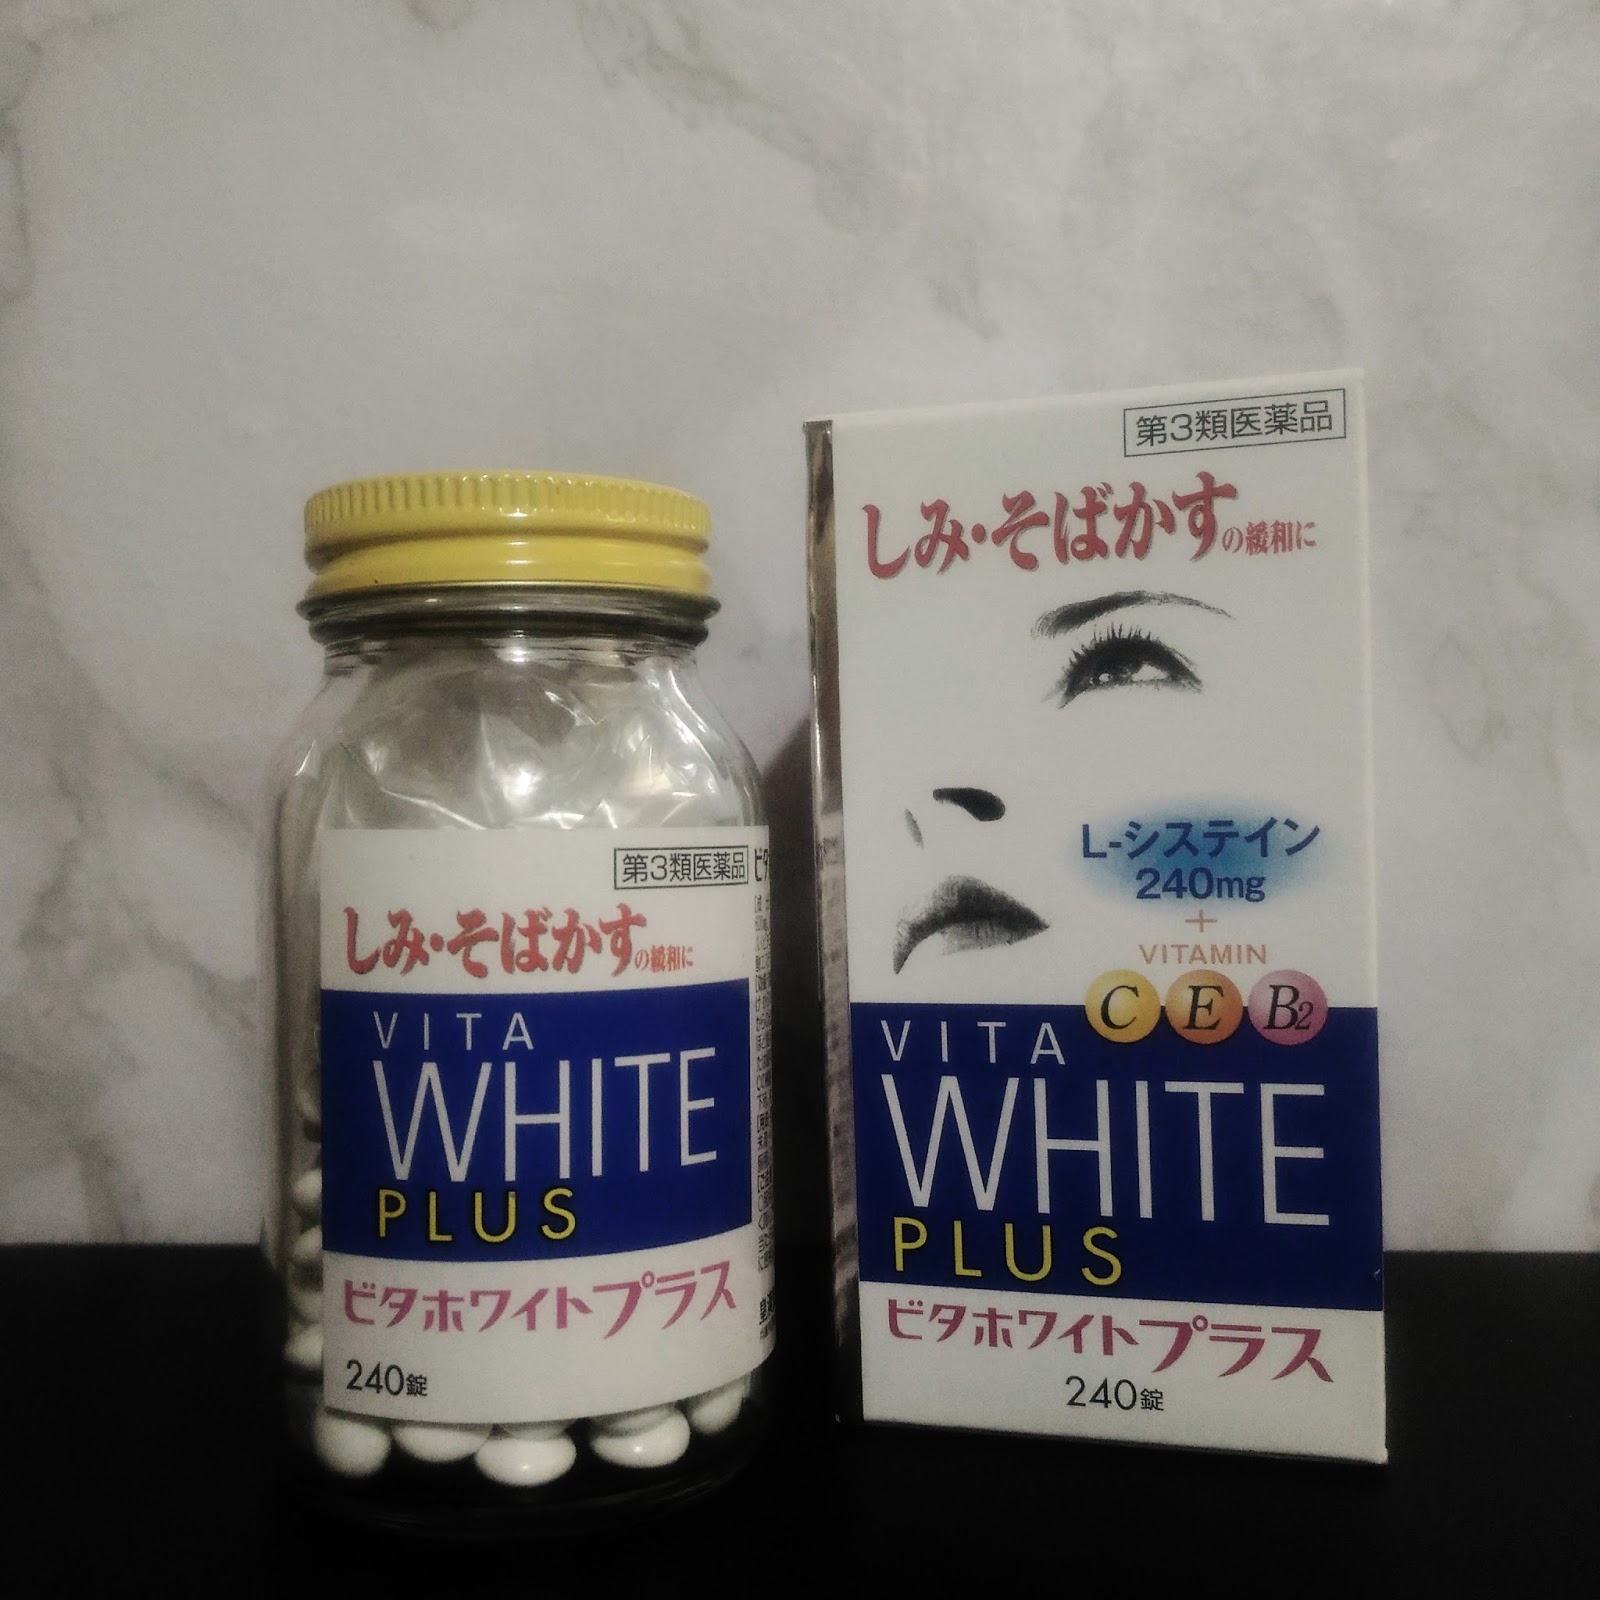 Kokando Vita White Plus L-Cysteine Whitening Tablets - Dorothy Torretijo